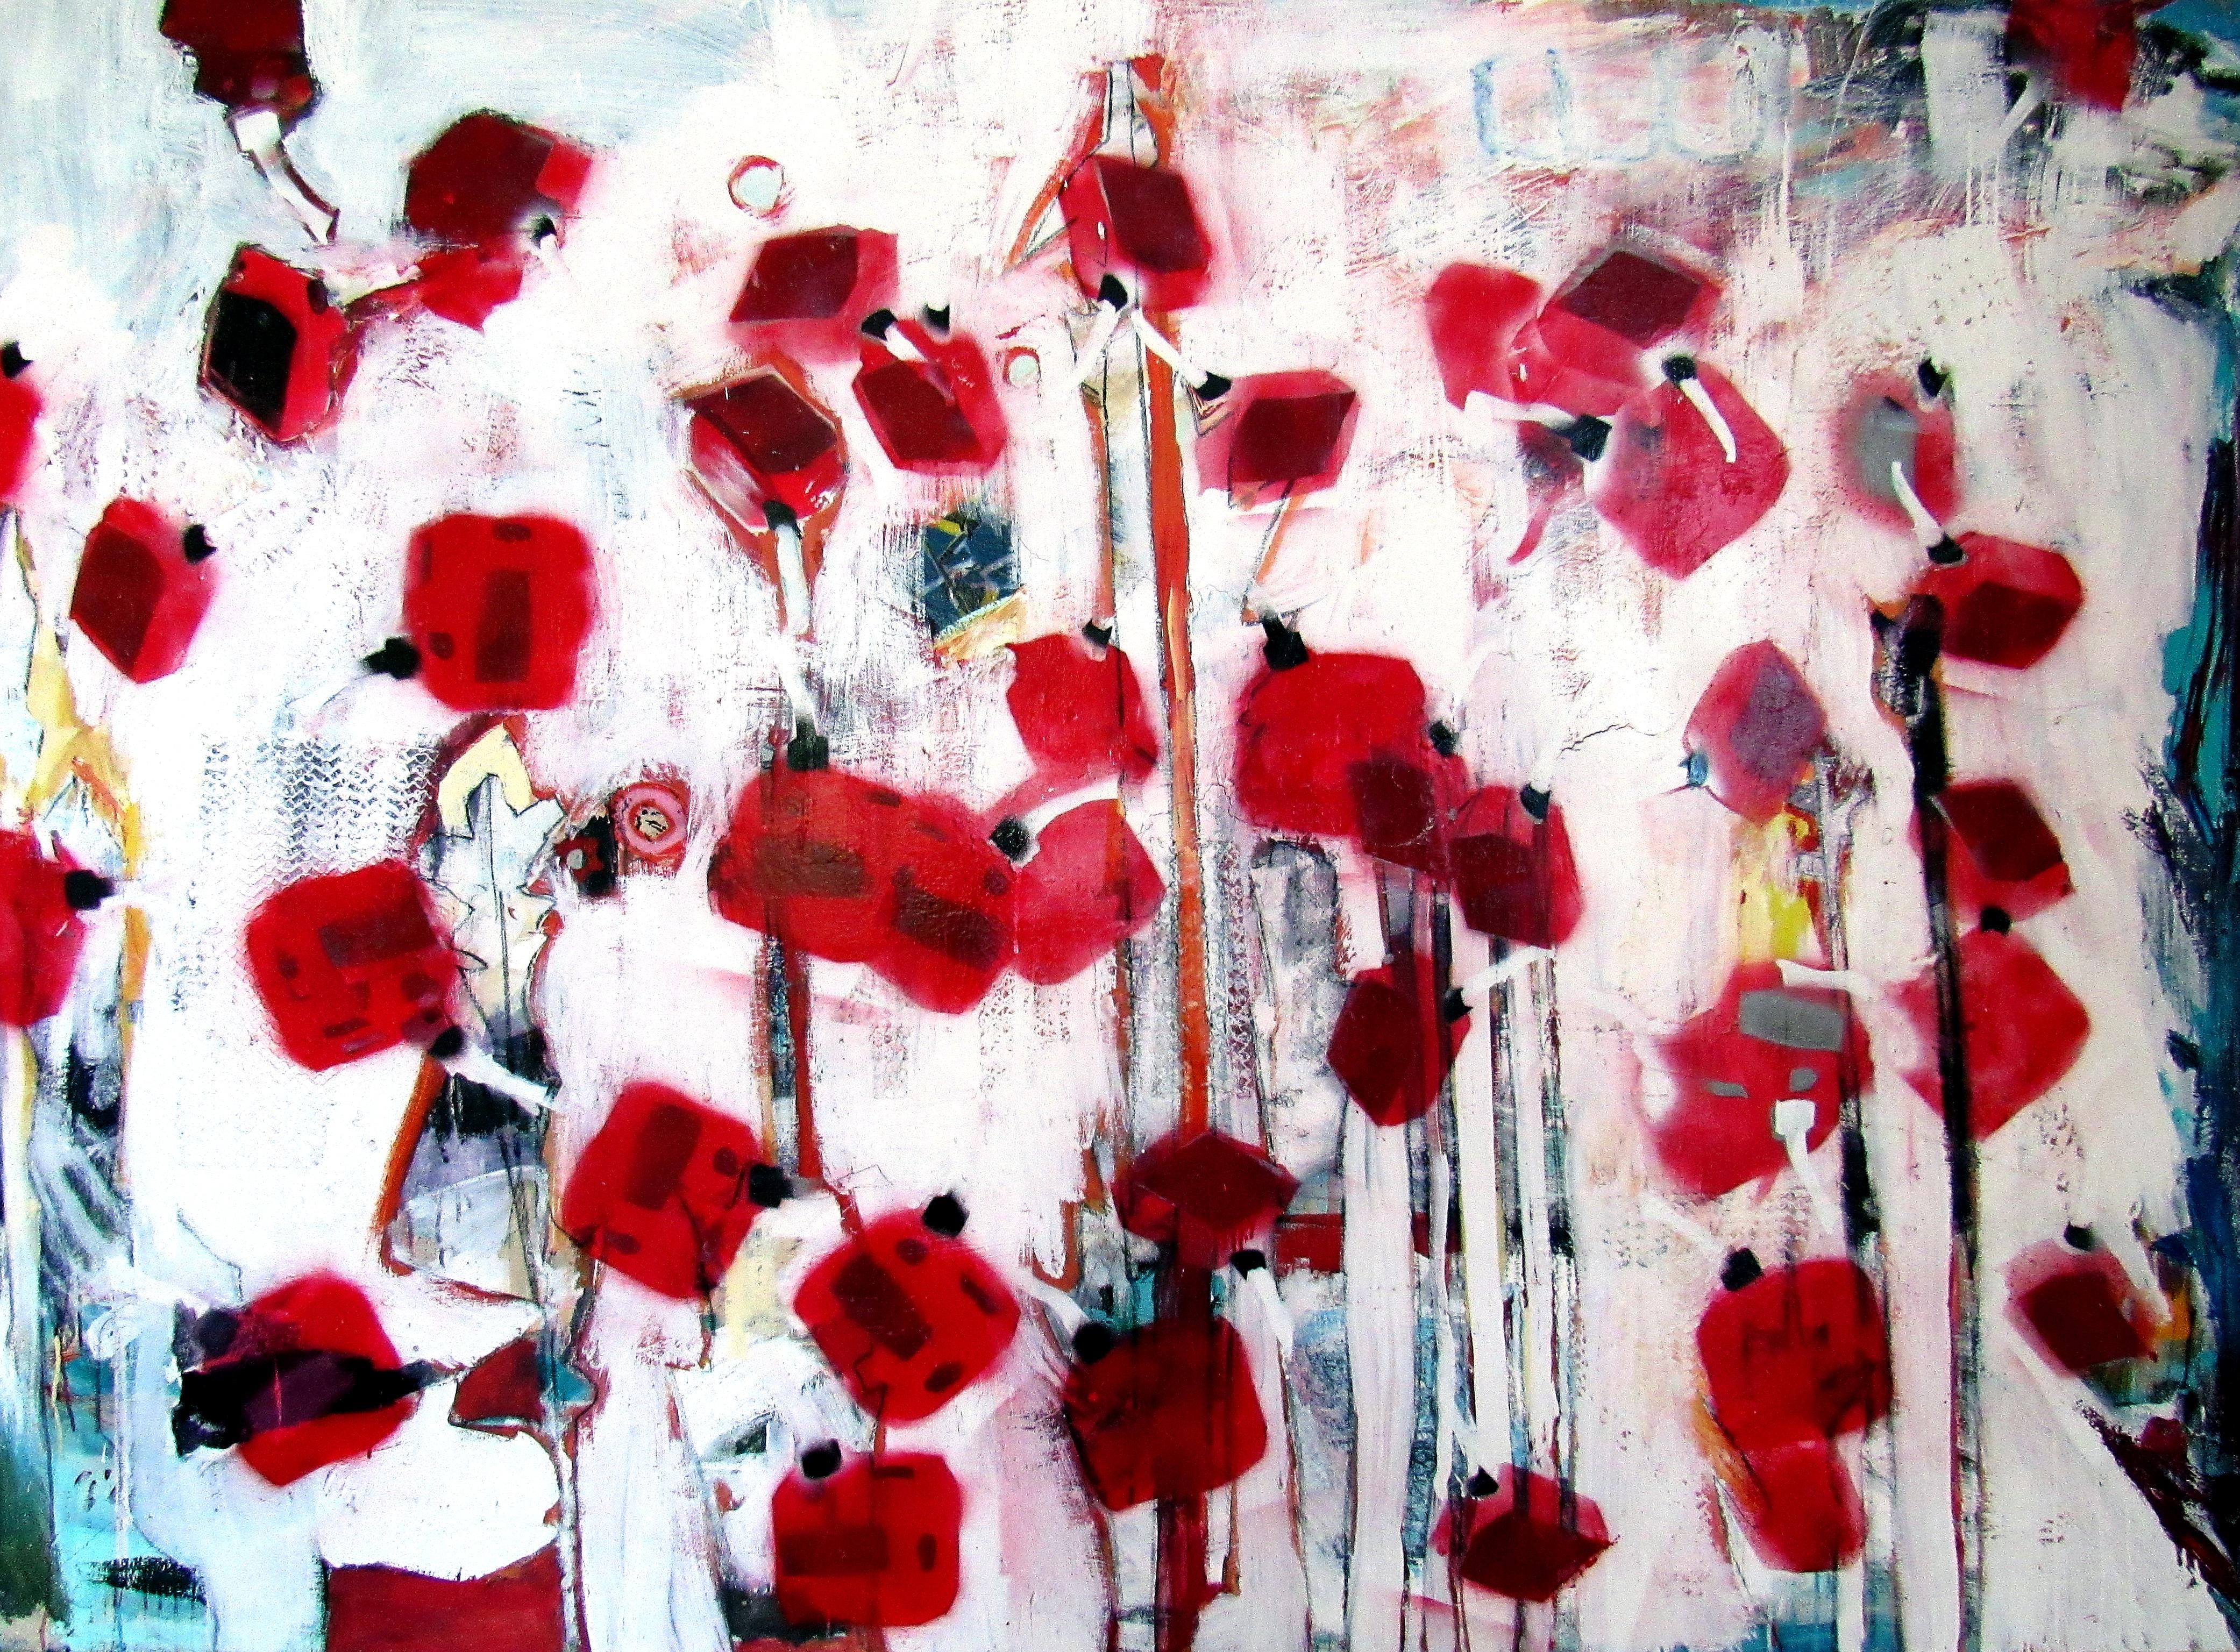 C. Dimitri Abstract Painting – Forest, skurriles abstraktes Gemälde in Rot und Weiß